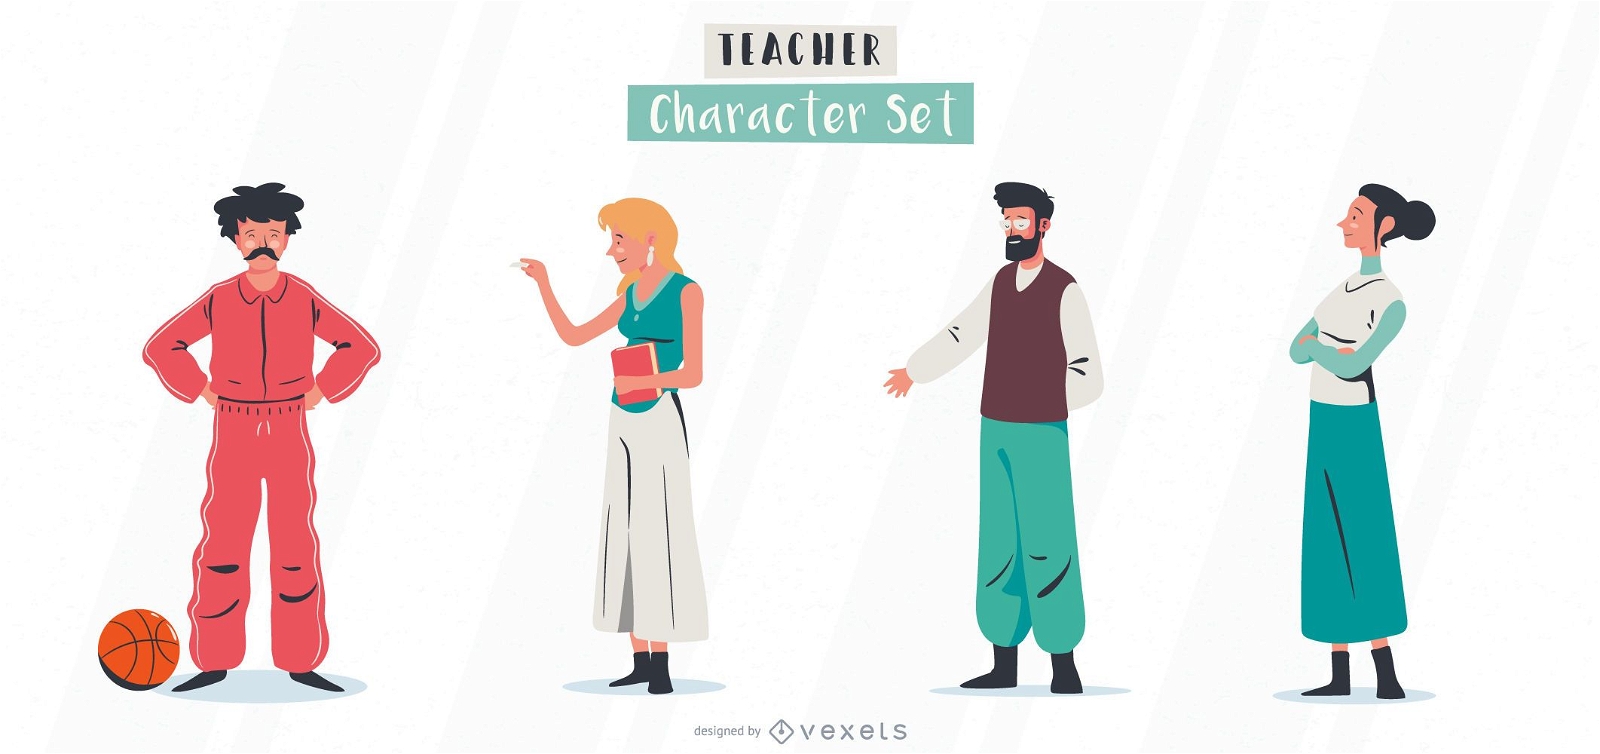 Teacher Characters Illustration Set